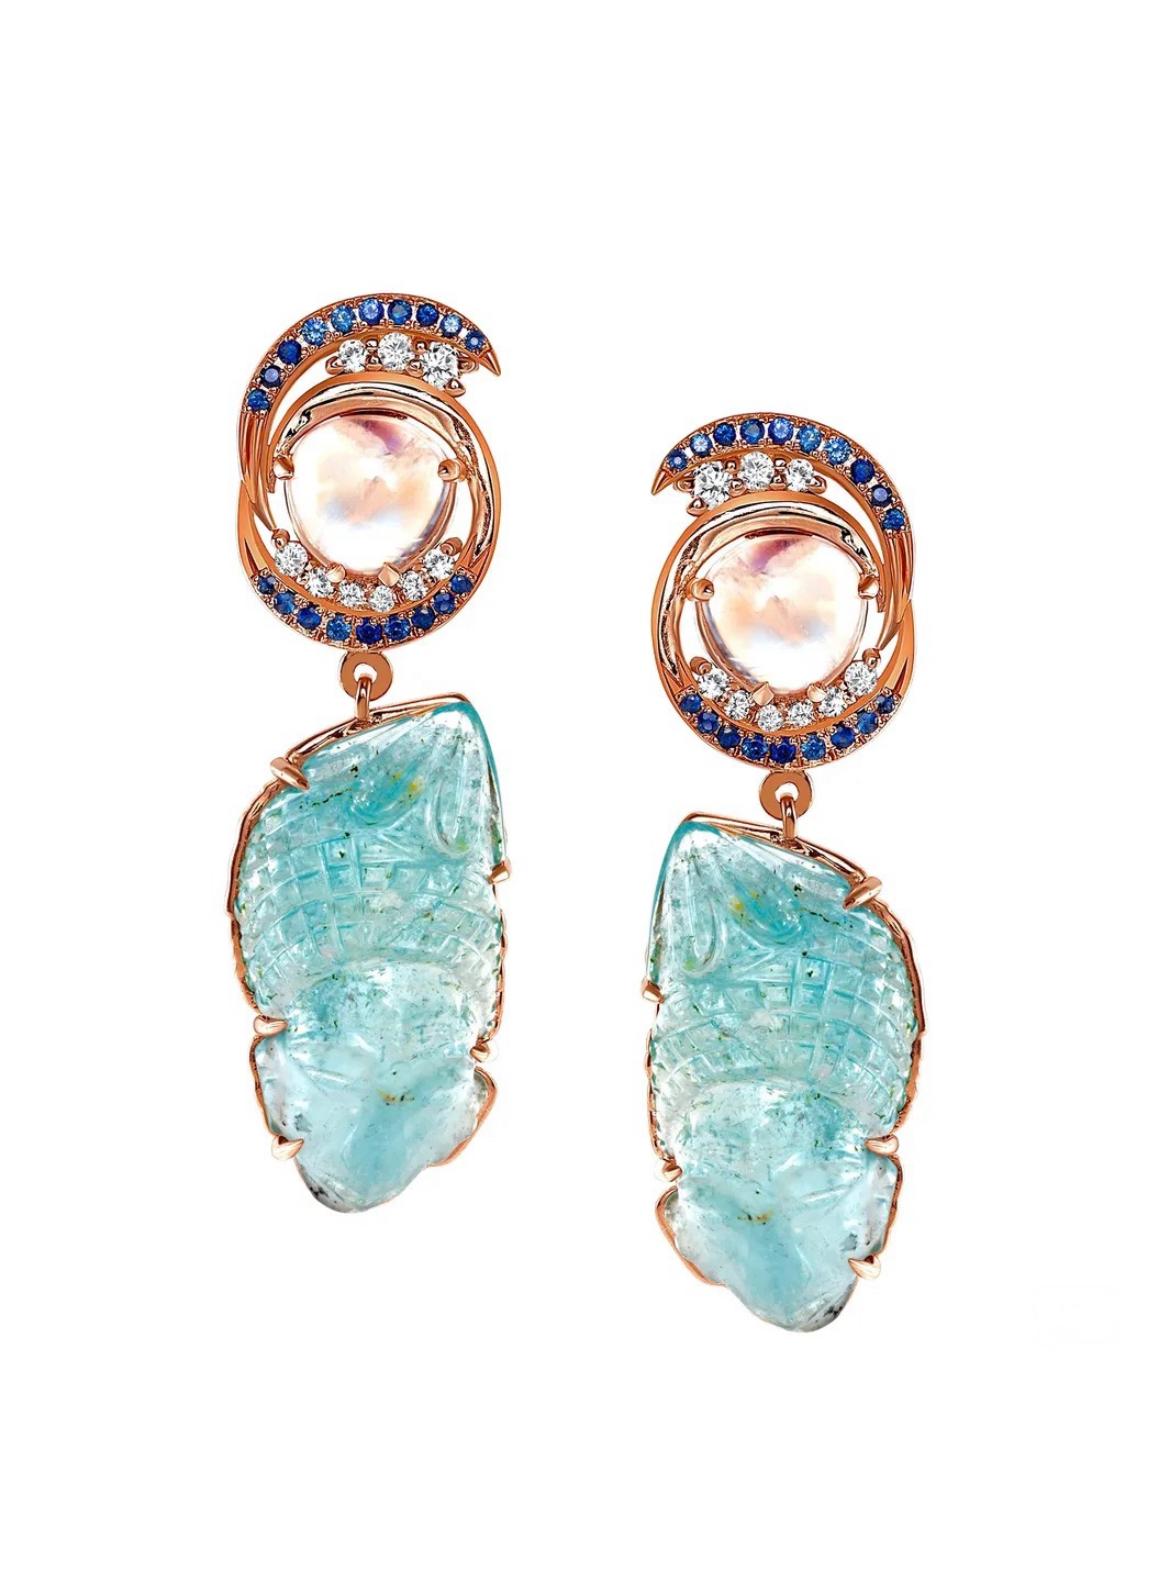 Modern Blue Sapphire, Aquamarine and Rainbow Moonstone earrings. 